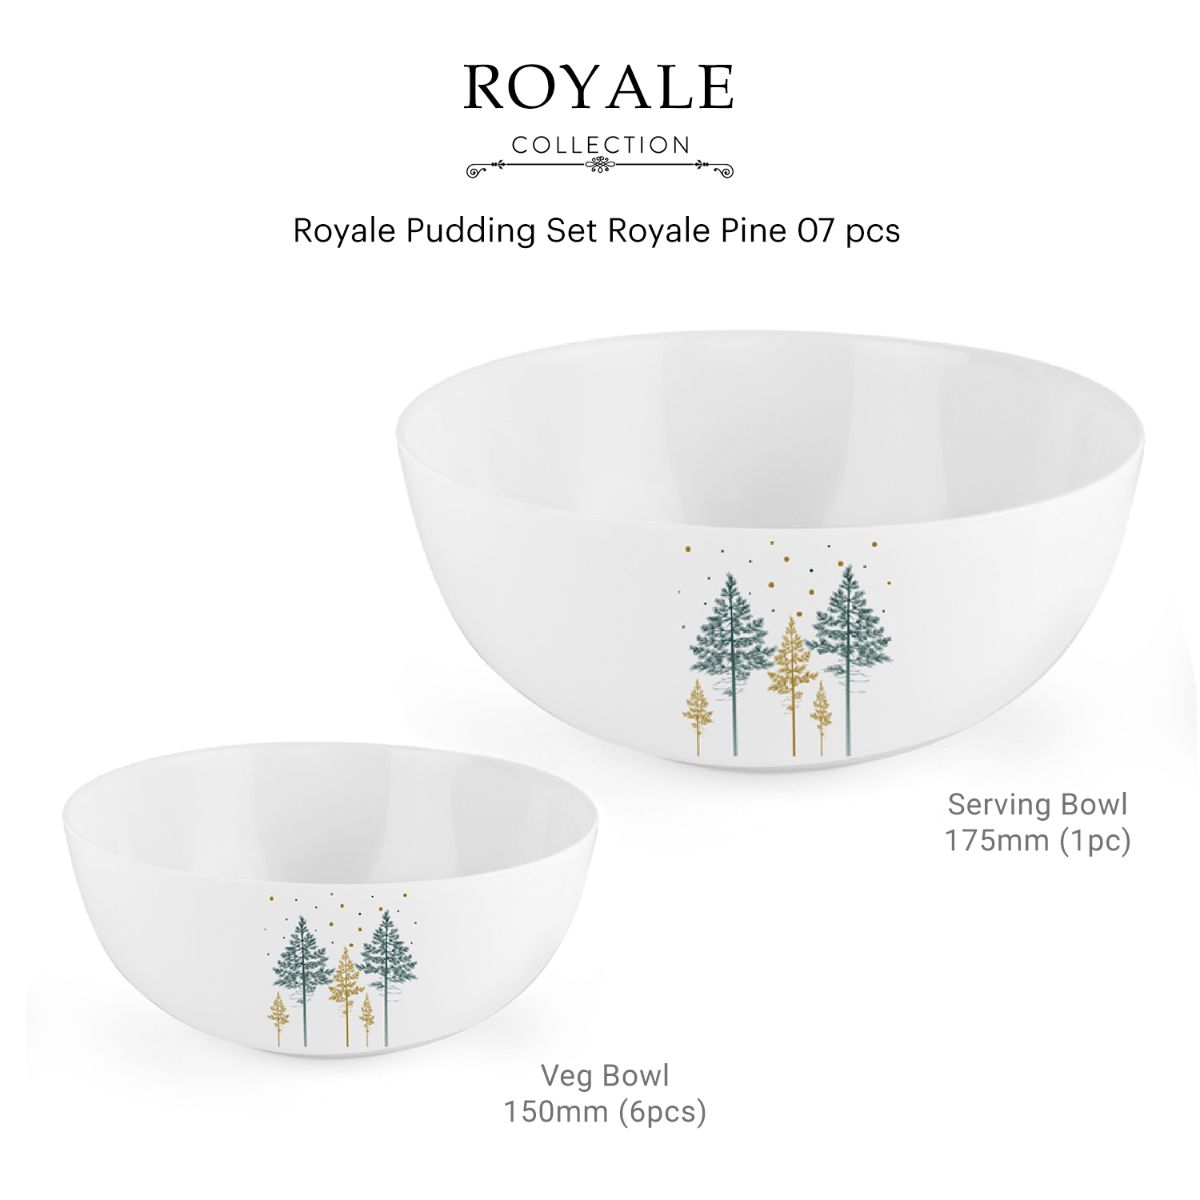 Royale Series Pudding Gift Set, 7 Pieces Royale Pine / 7 Pieces